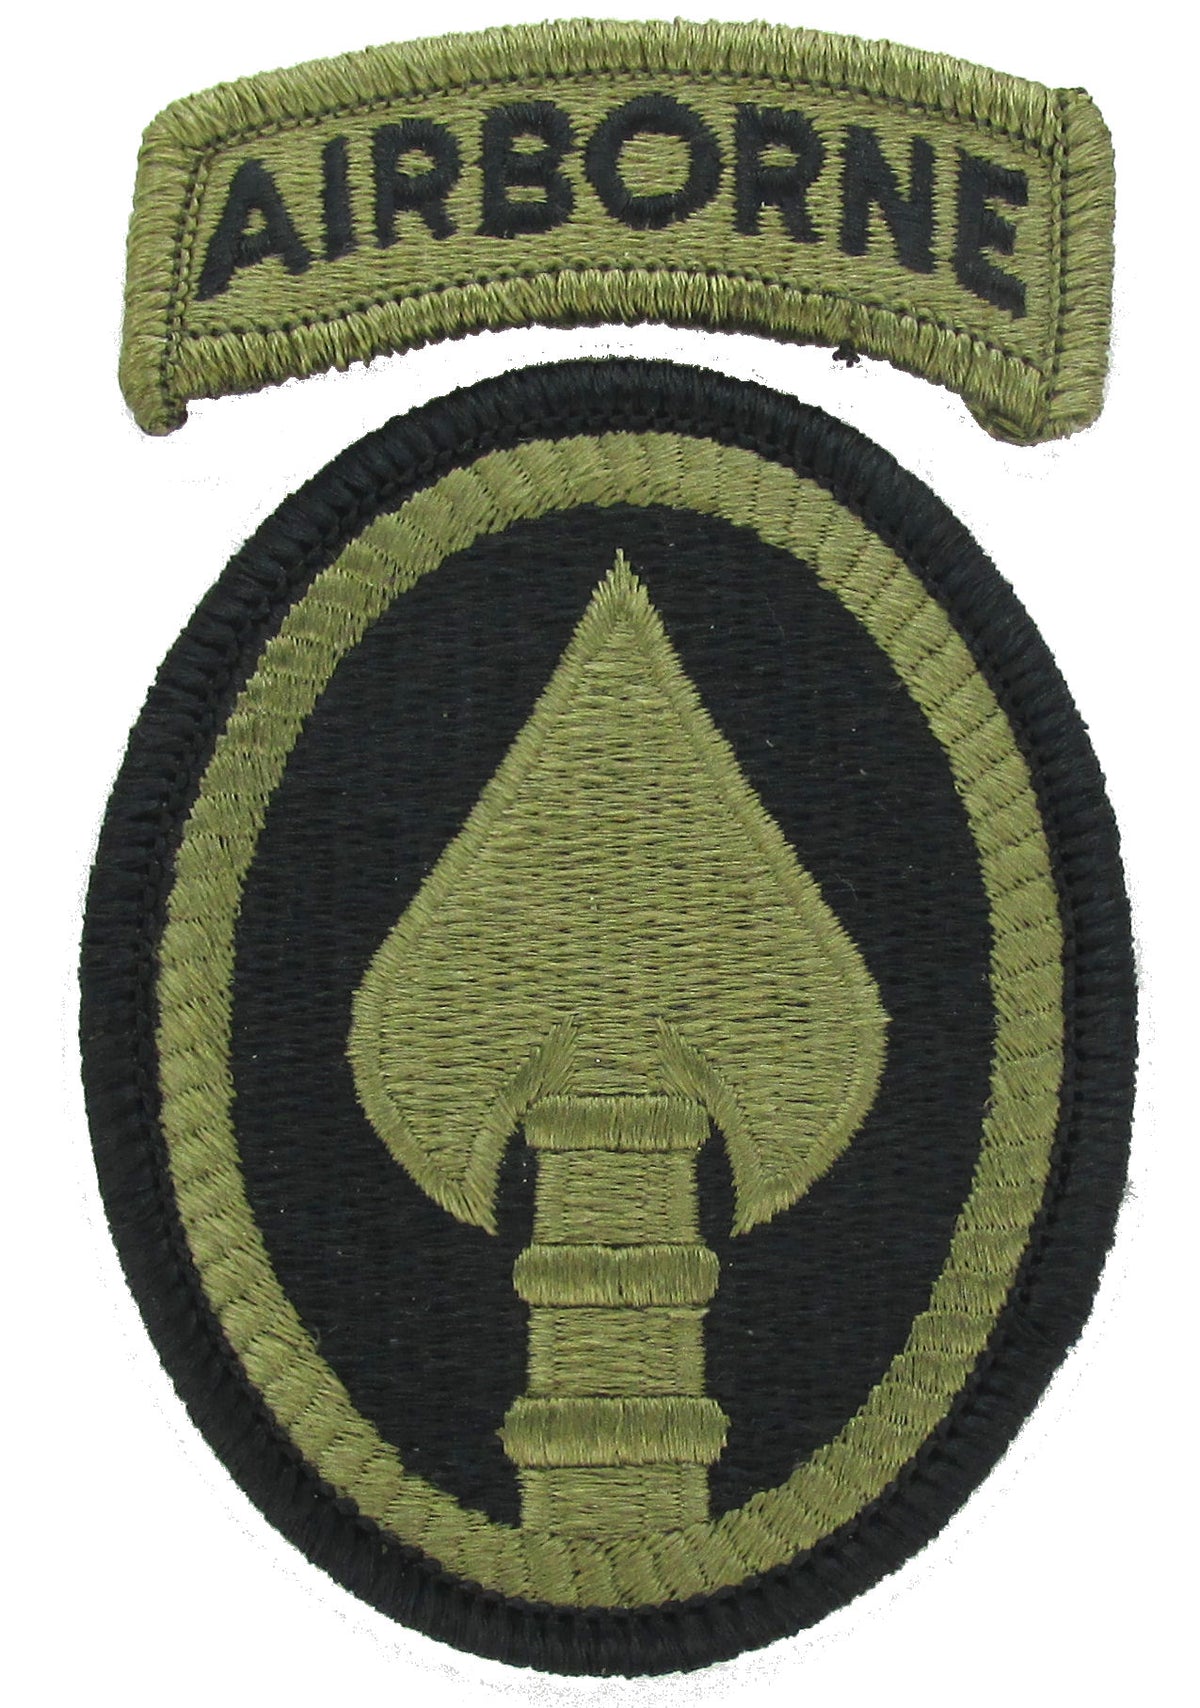 SOCOM U.S. Army Special Operation Command OCP Patch